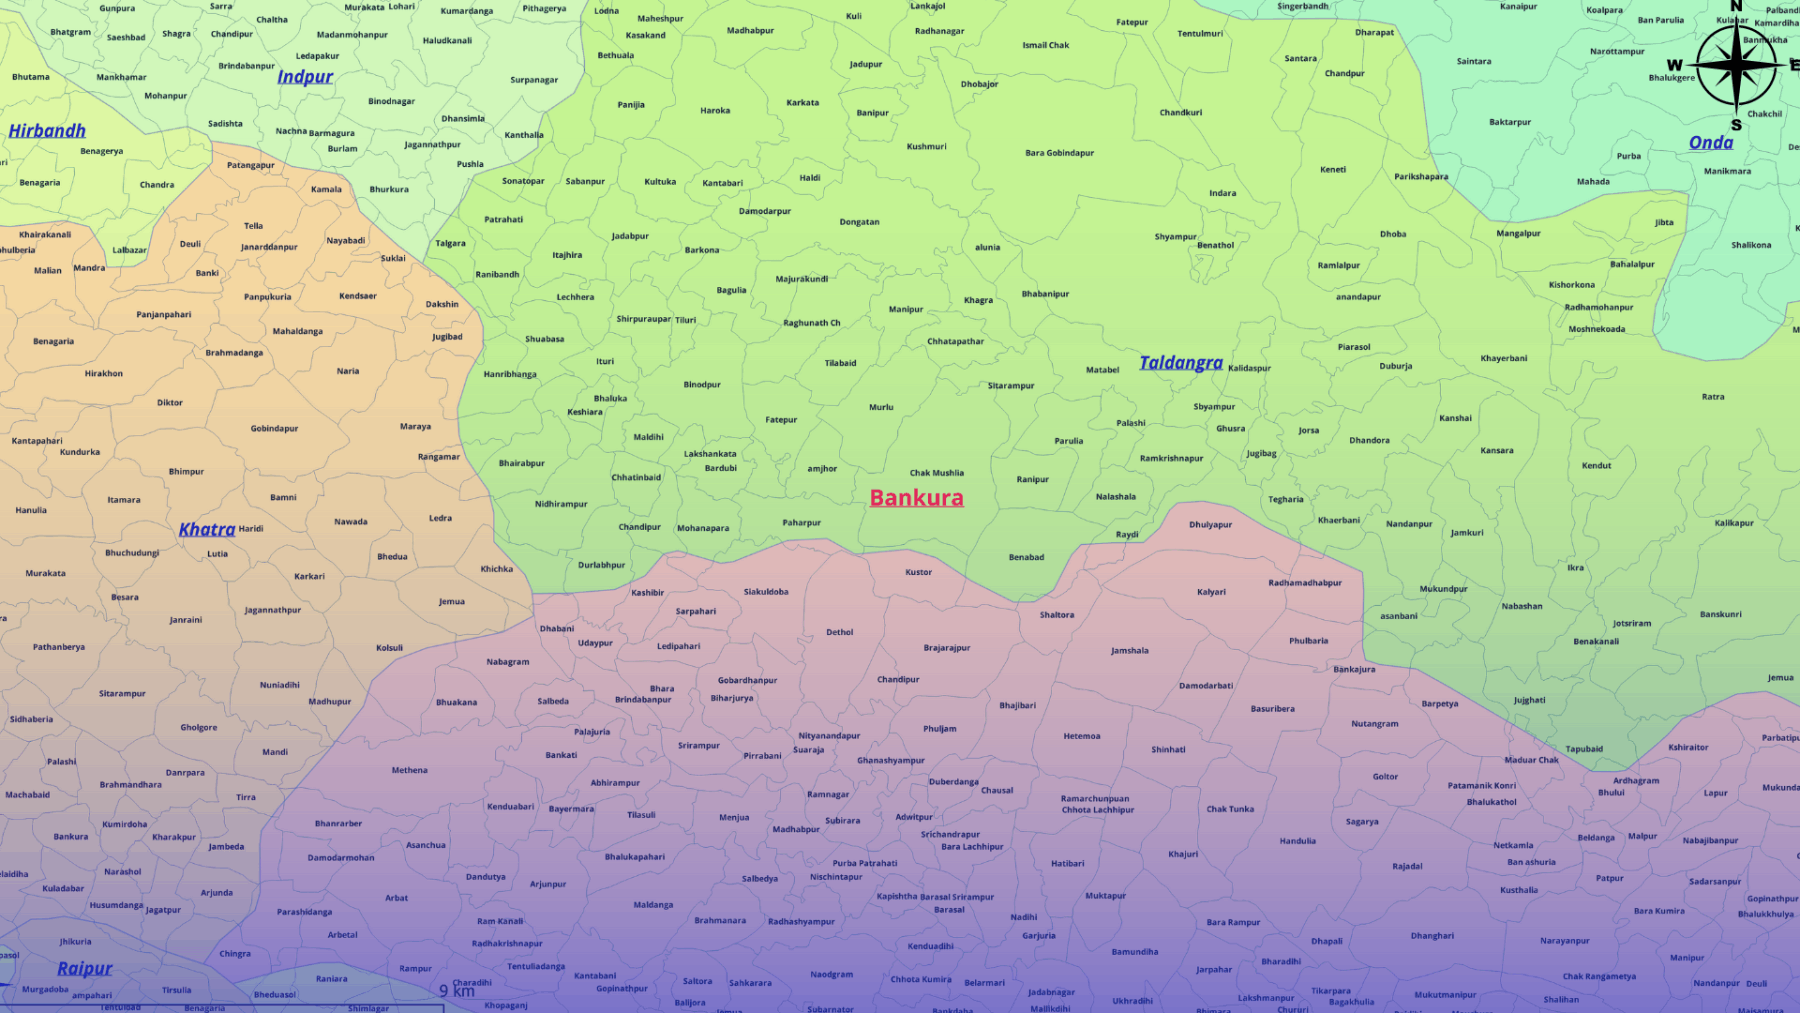 Village Boundaries map